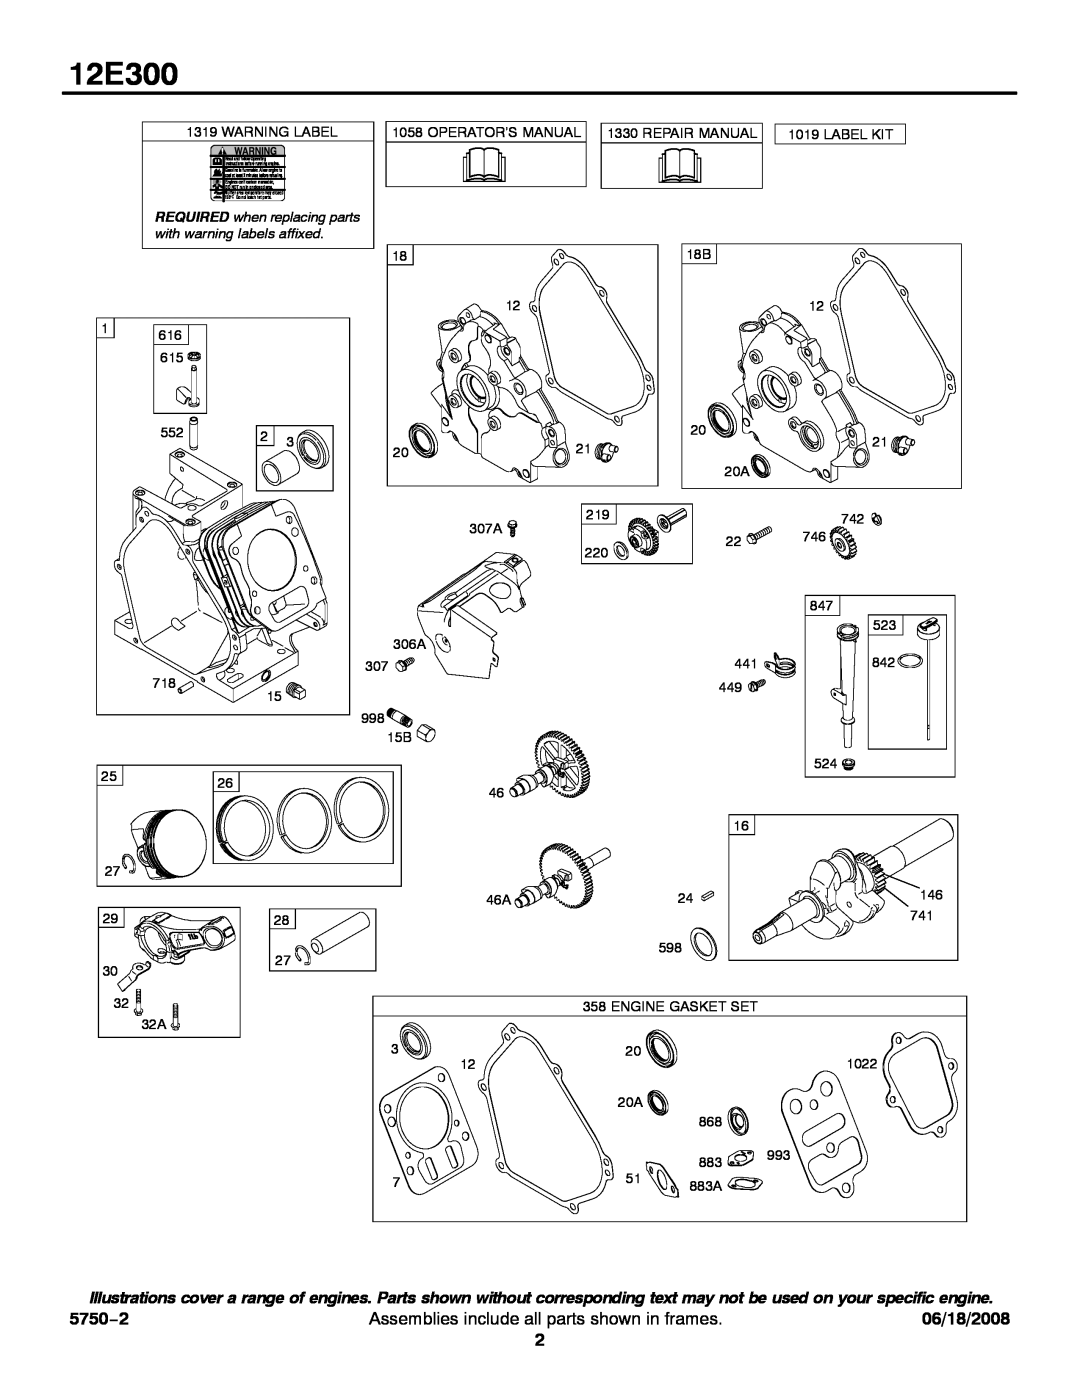 Briggs & Stratton 12E300 service manual 5750−2, Assemblies include all parts shown in frames, 06/18/2008 